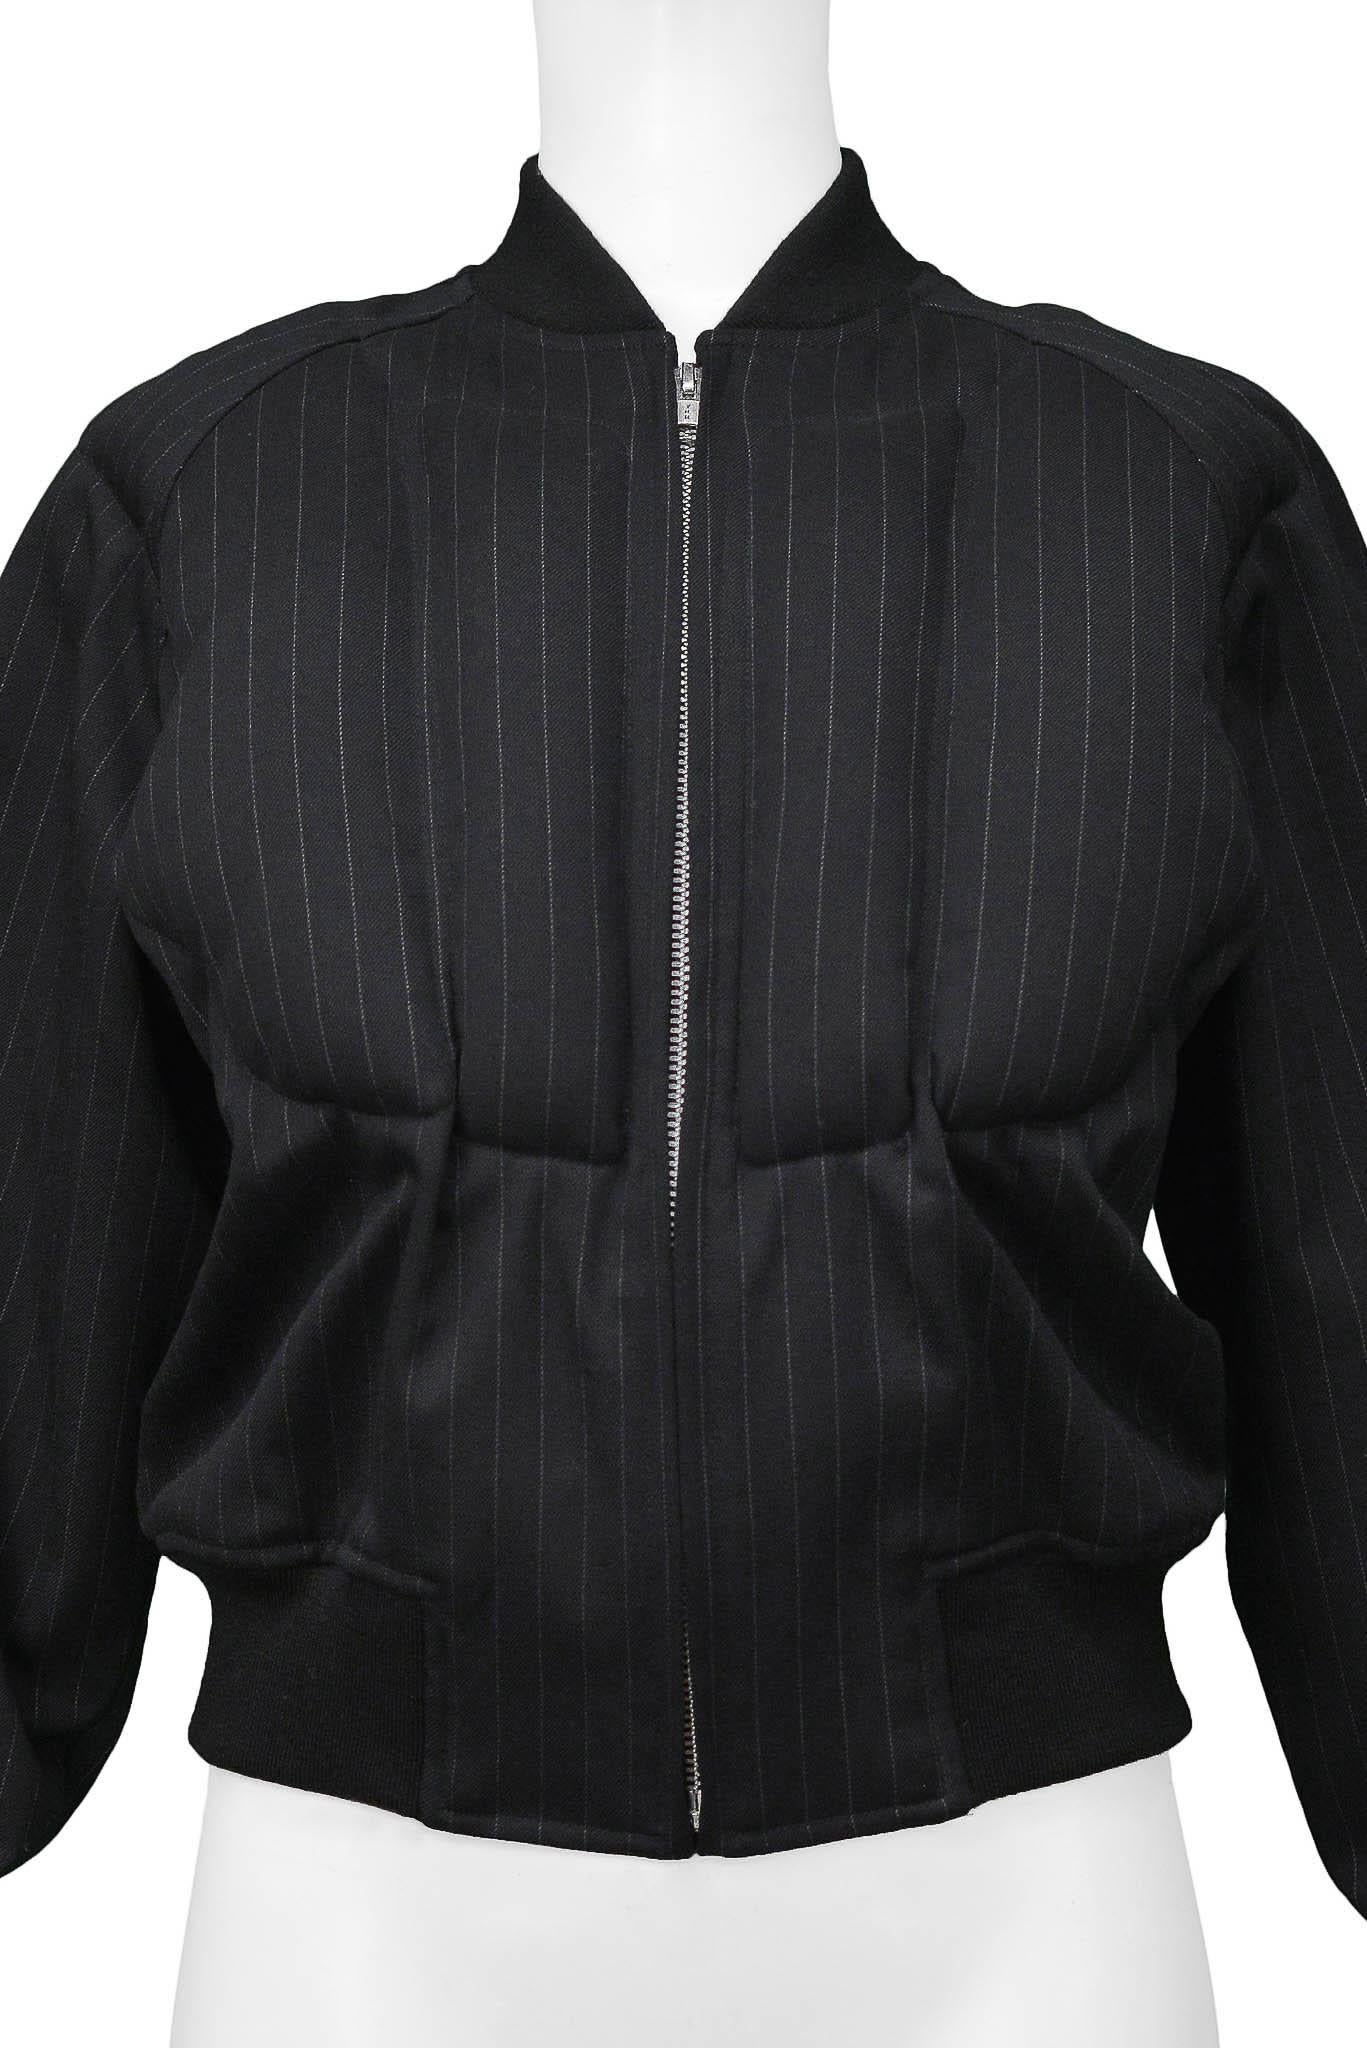 Noir Comme Des Garcons Black Padded Pinstripe Jacket 2010 en vente